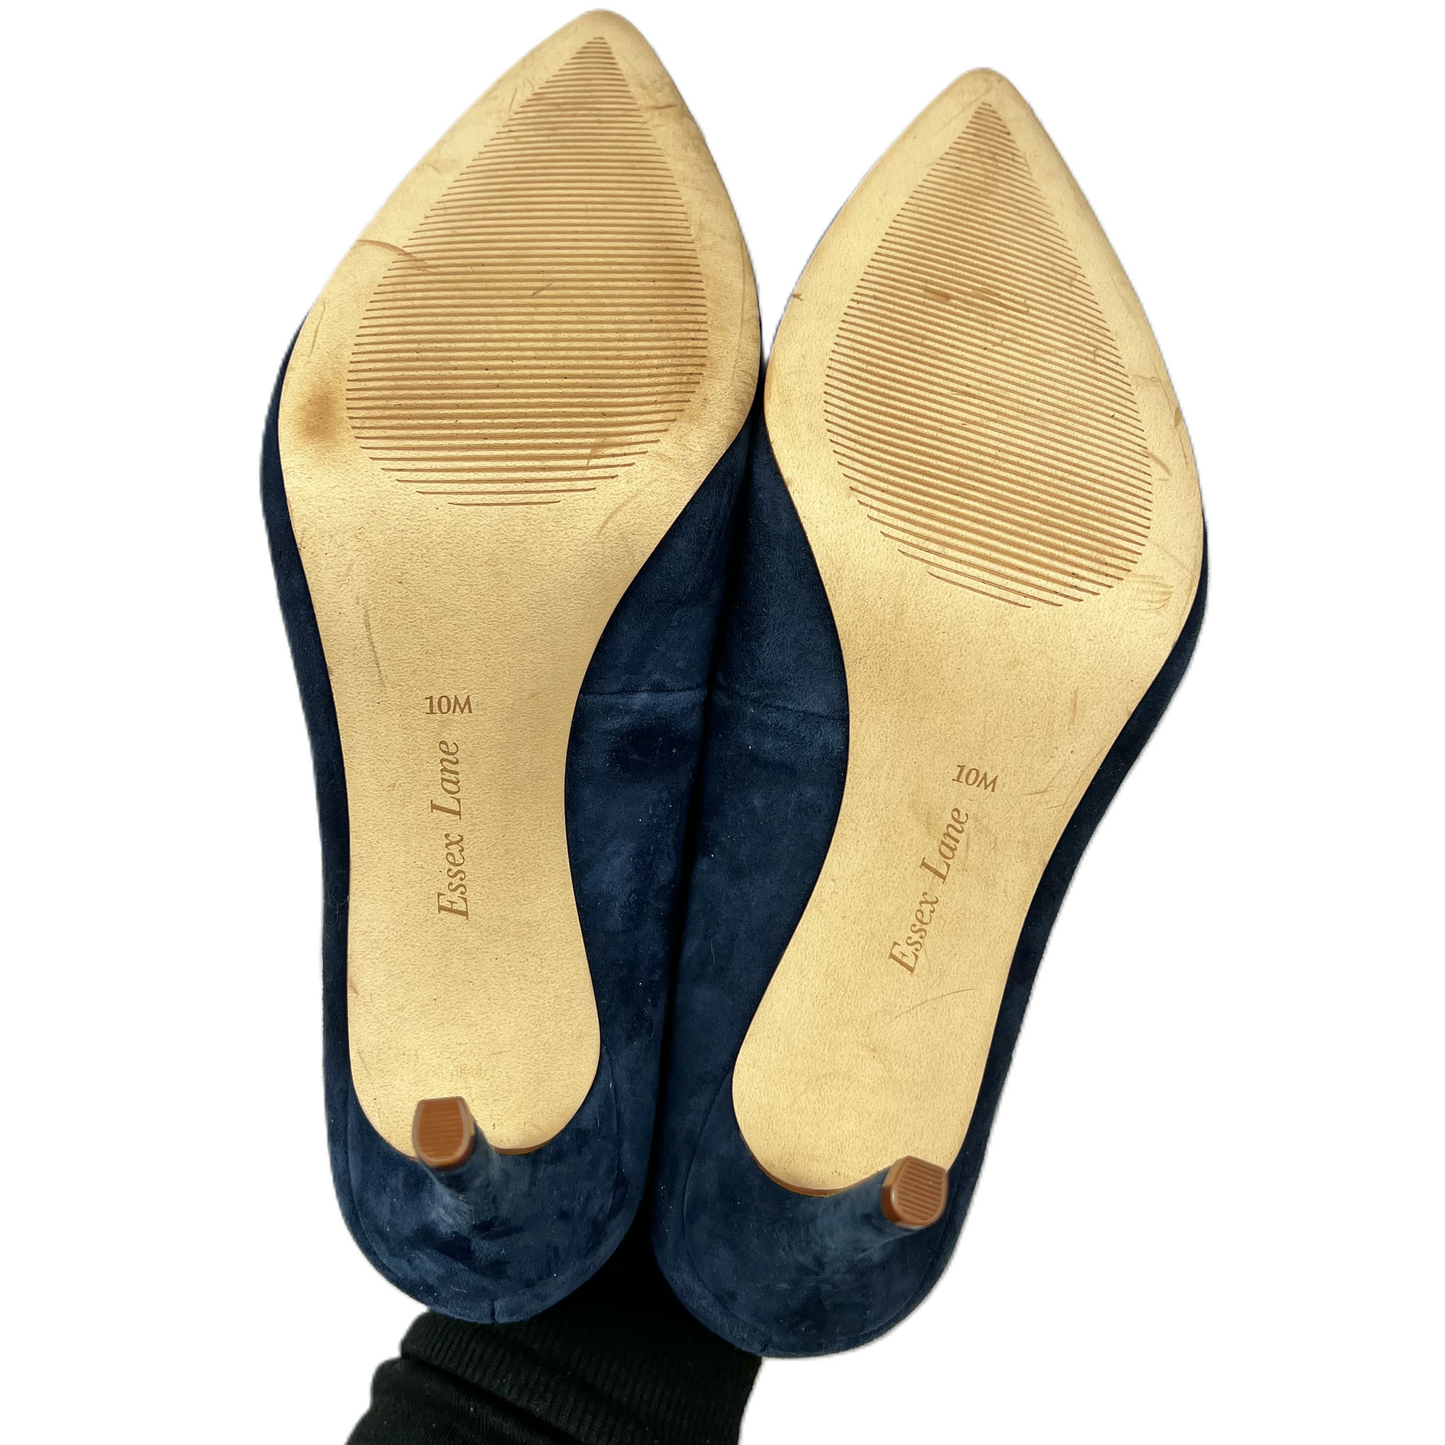 Blue Shoes Heels Stiletto By Essex Lane, Size: 10